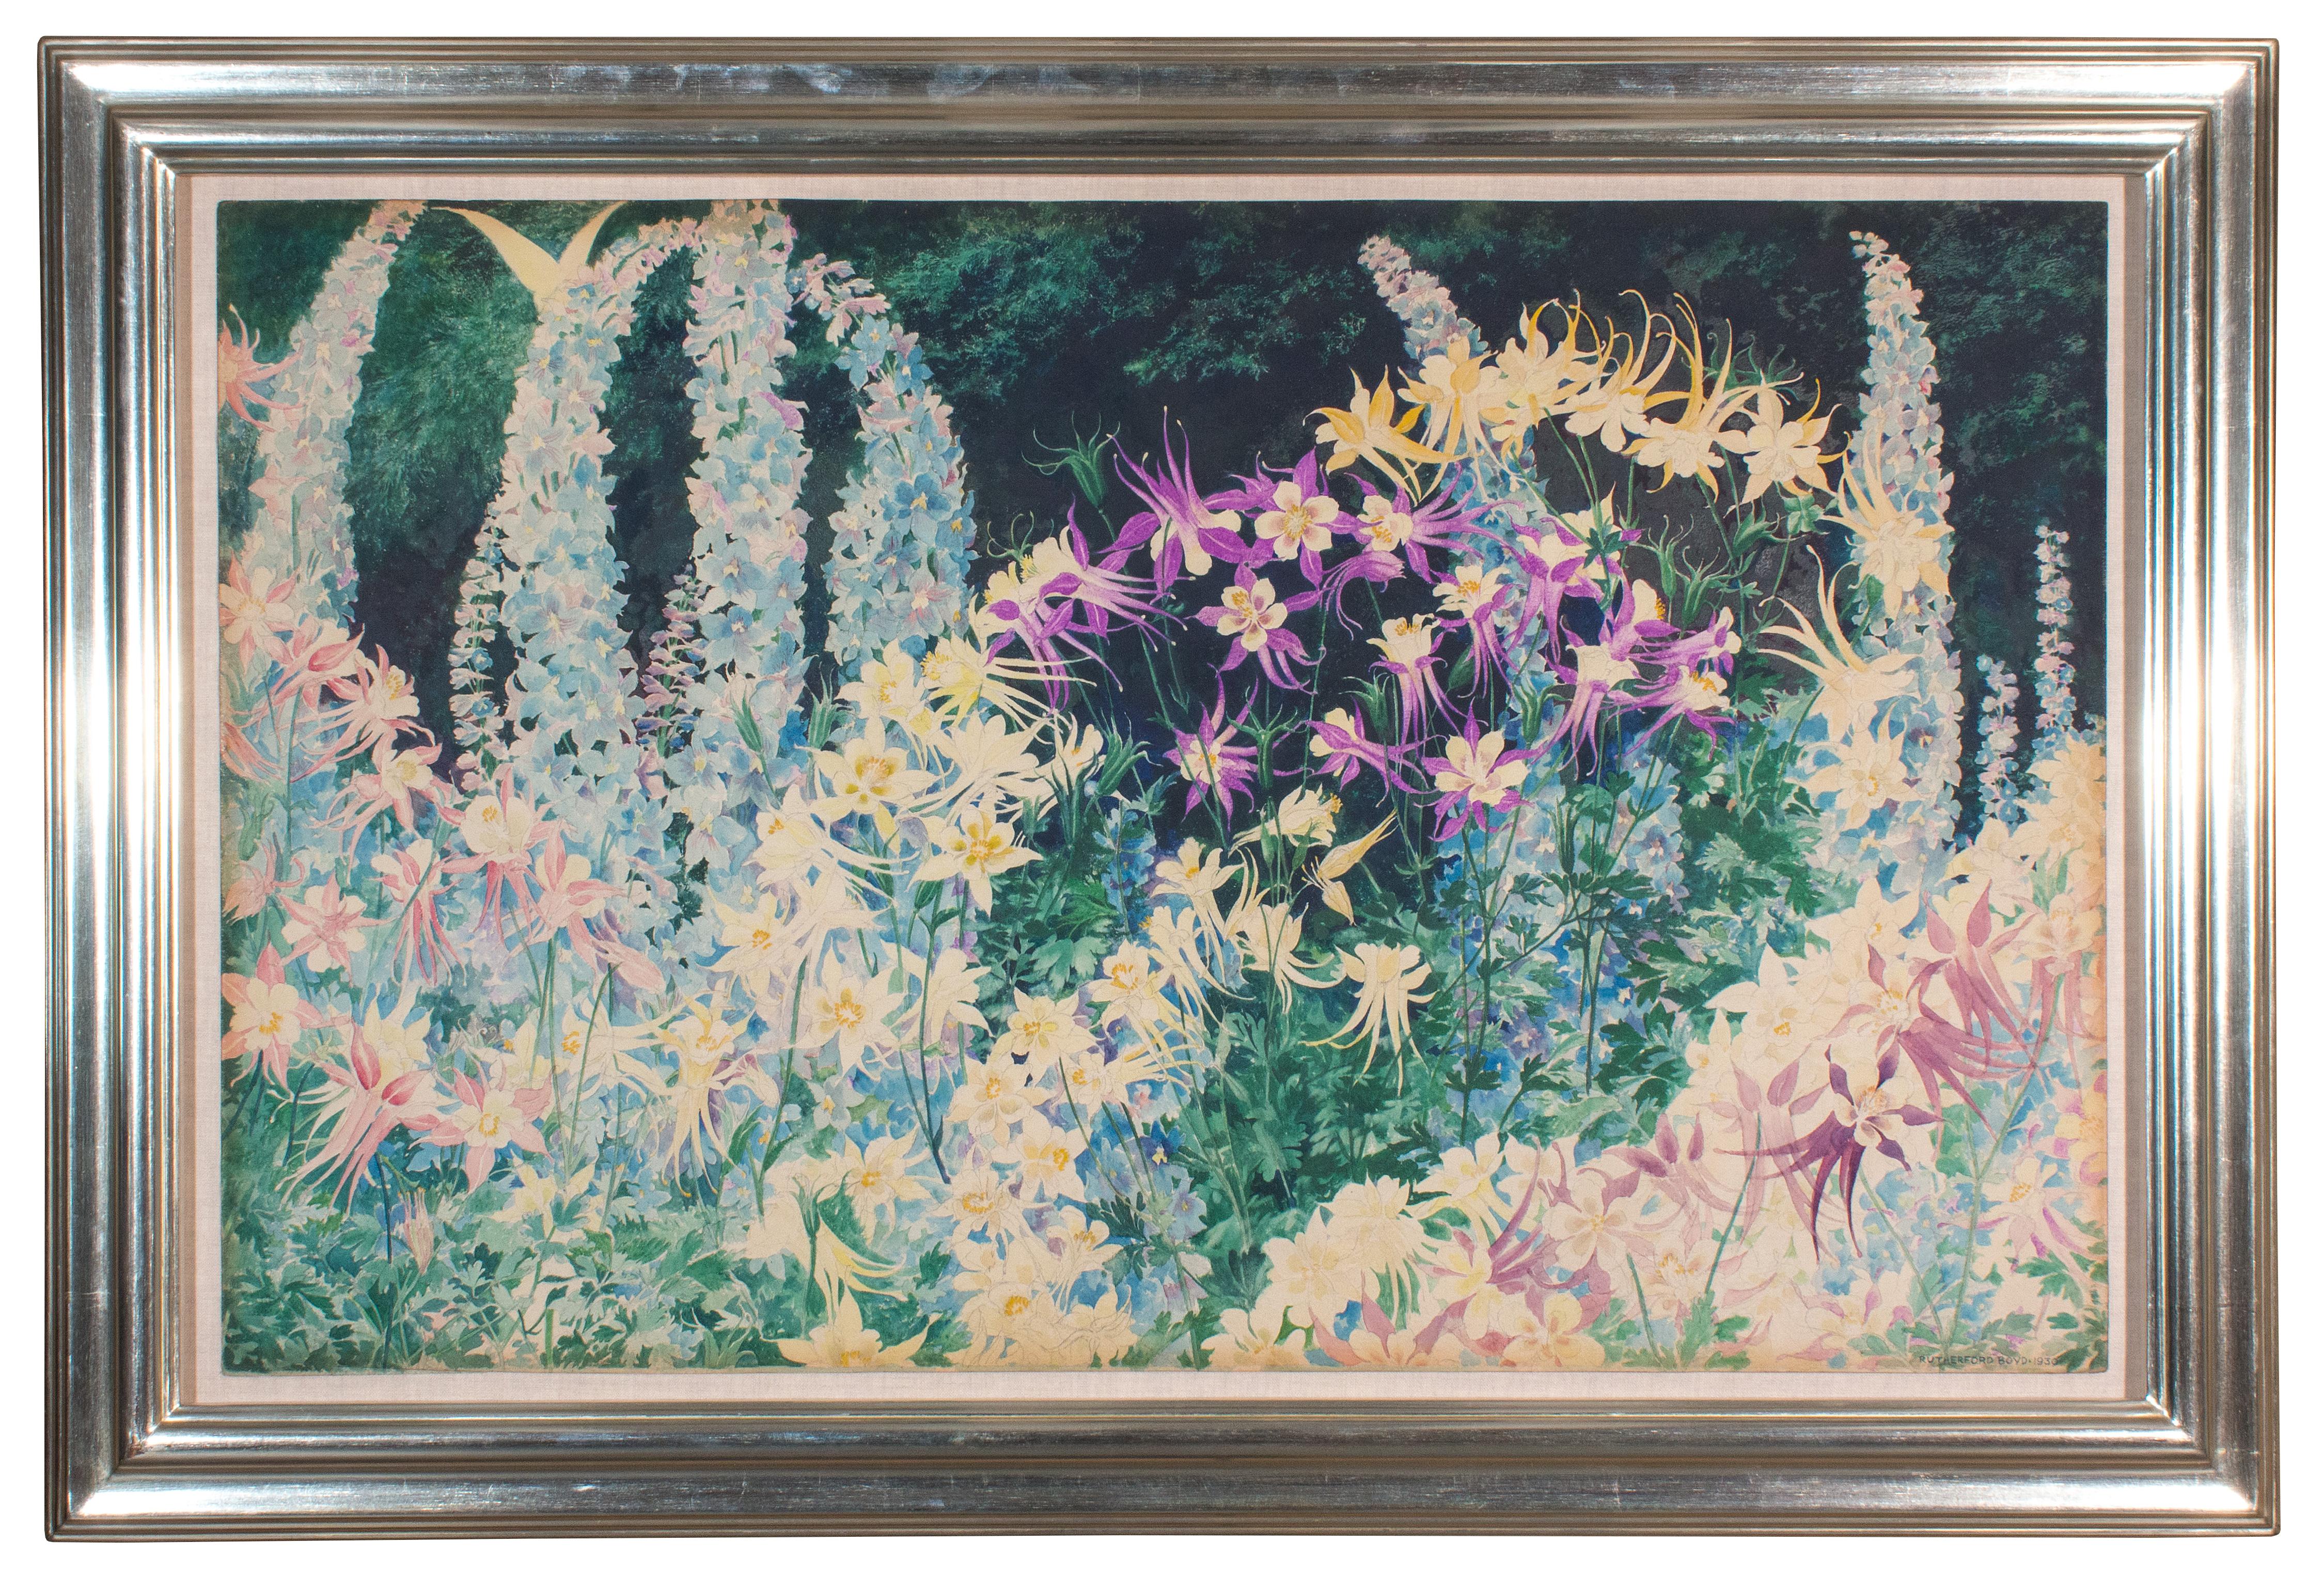 Fleurs : Aquilegia and Delphinium - Aquarelle impressionniste américaine sur papier